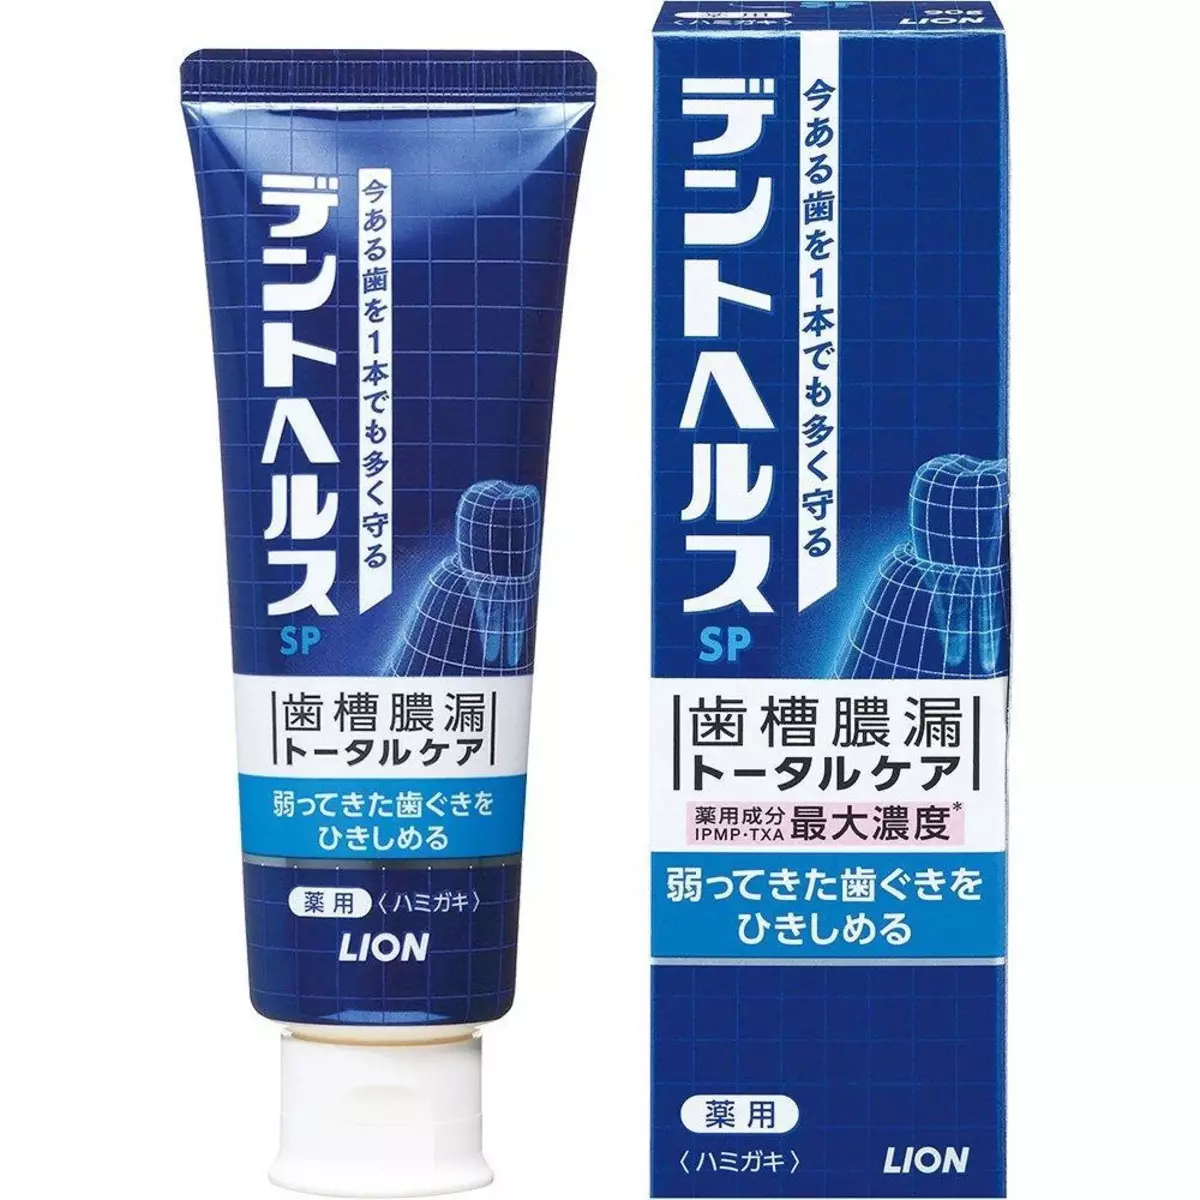 Tannkrem Lion: Zact Plus og Dentor Systema fra Korea, for røykere Zact Røyker Tannkrem og Dental Clear Max, Andre produkter, Omtaler 16173_6